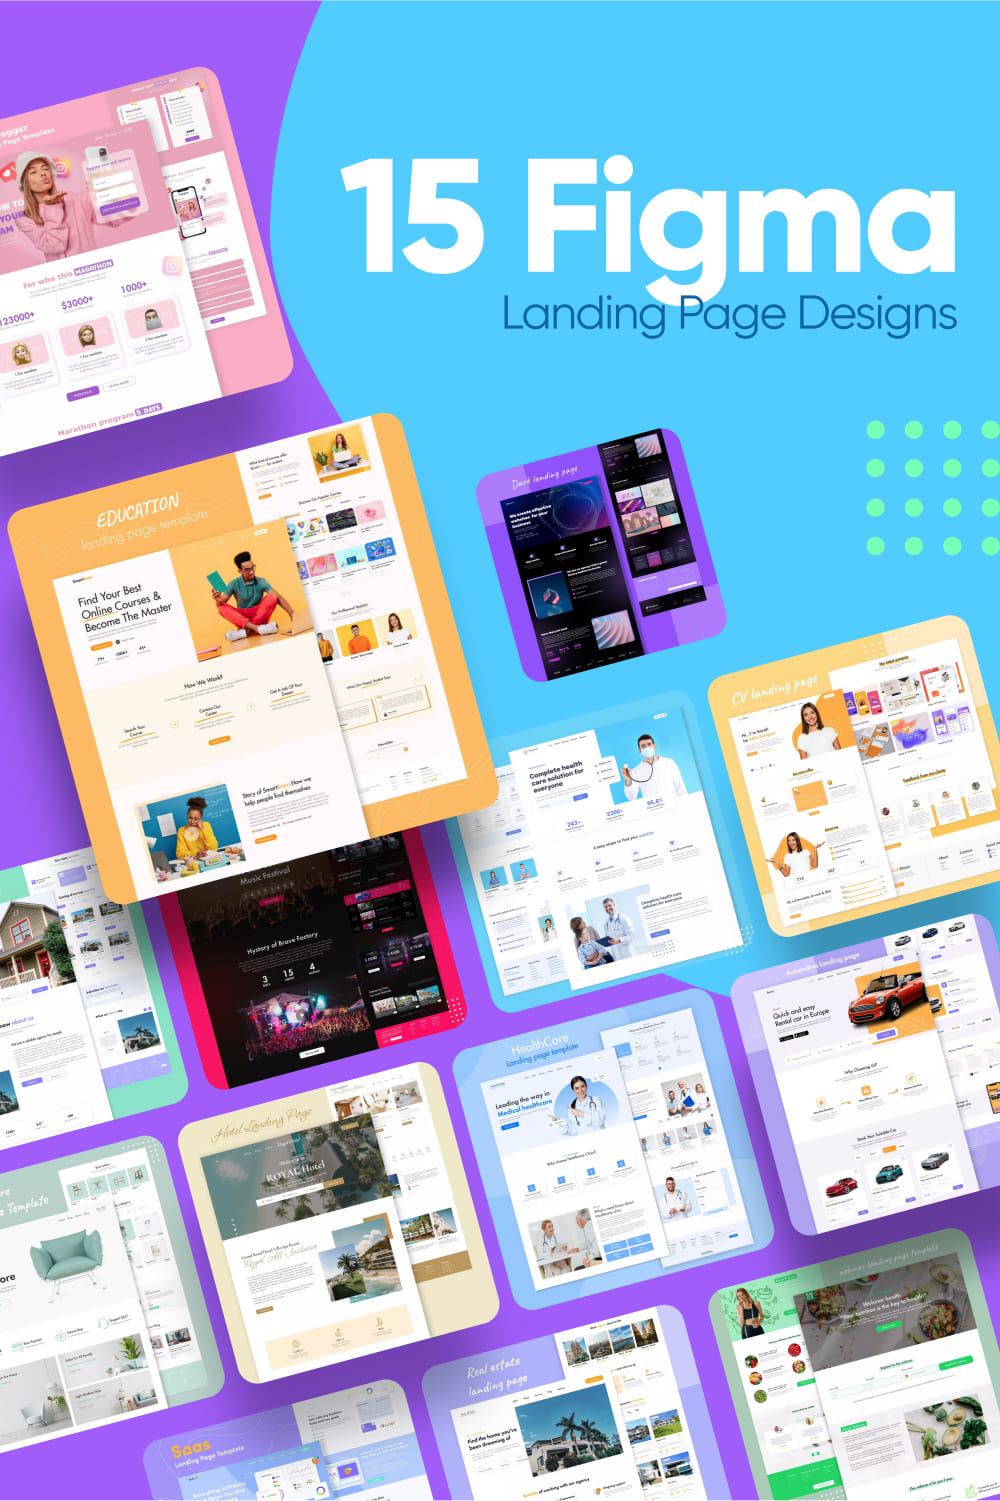 15 Figma Landing Page Designs Pinterest.